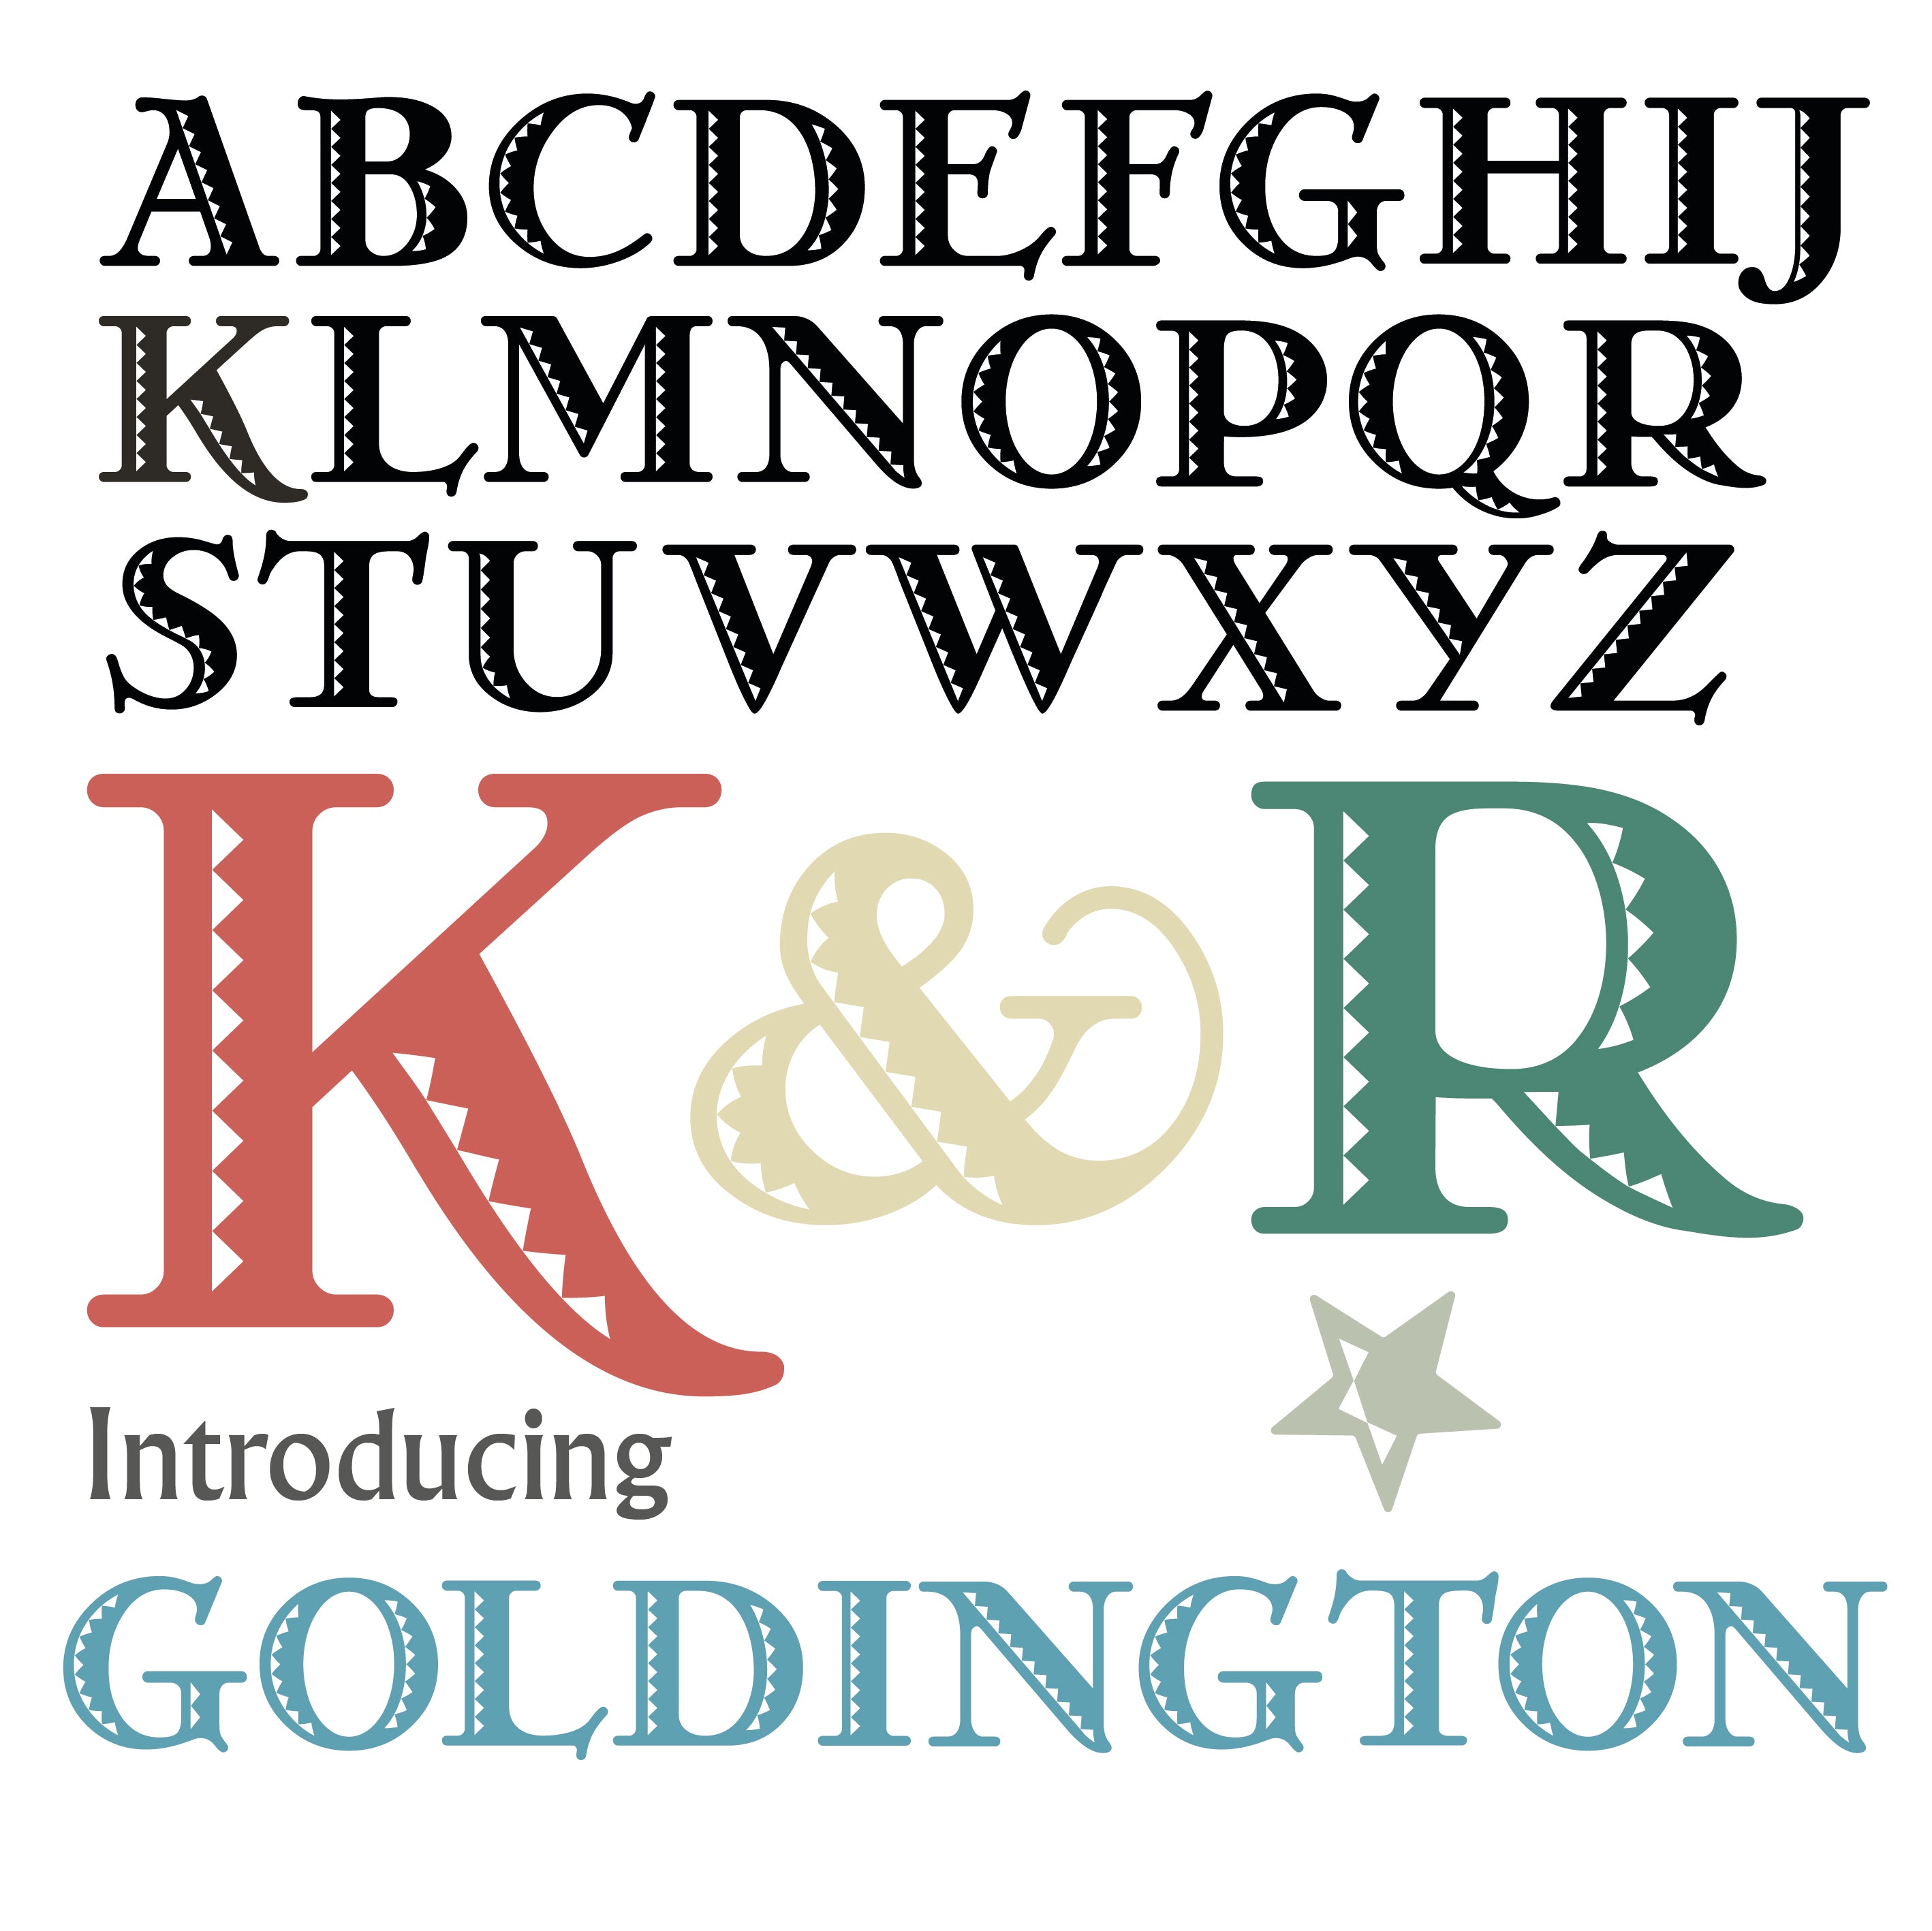 'Goldington' letterpress woodtype typeface